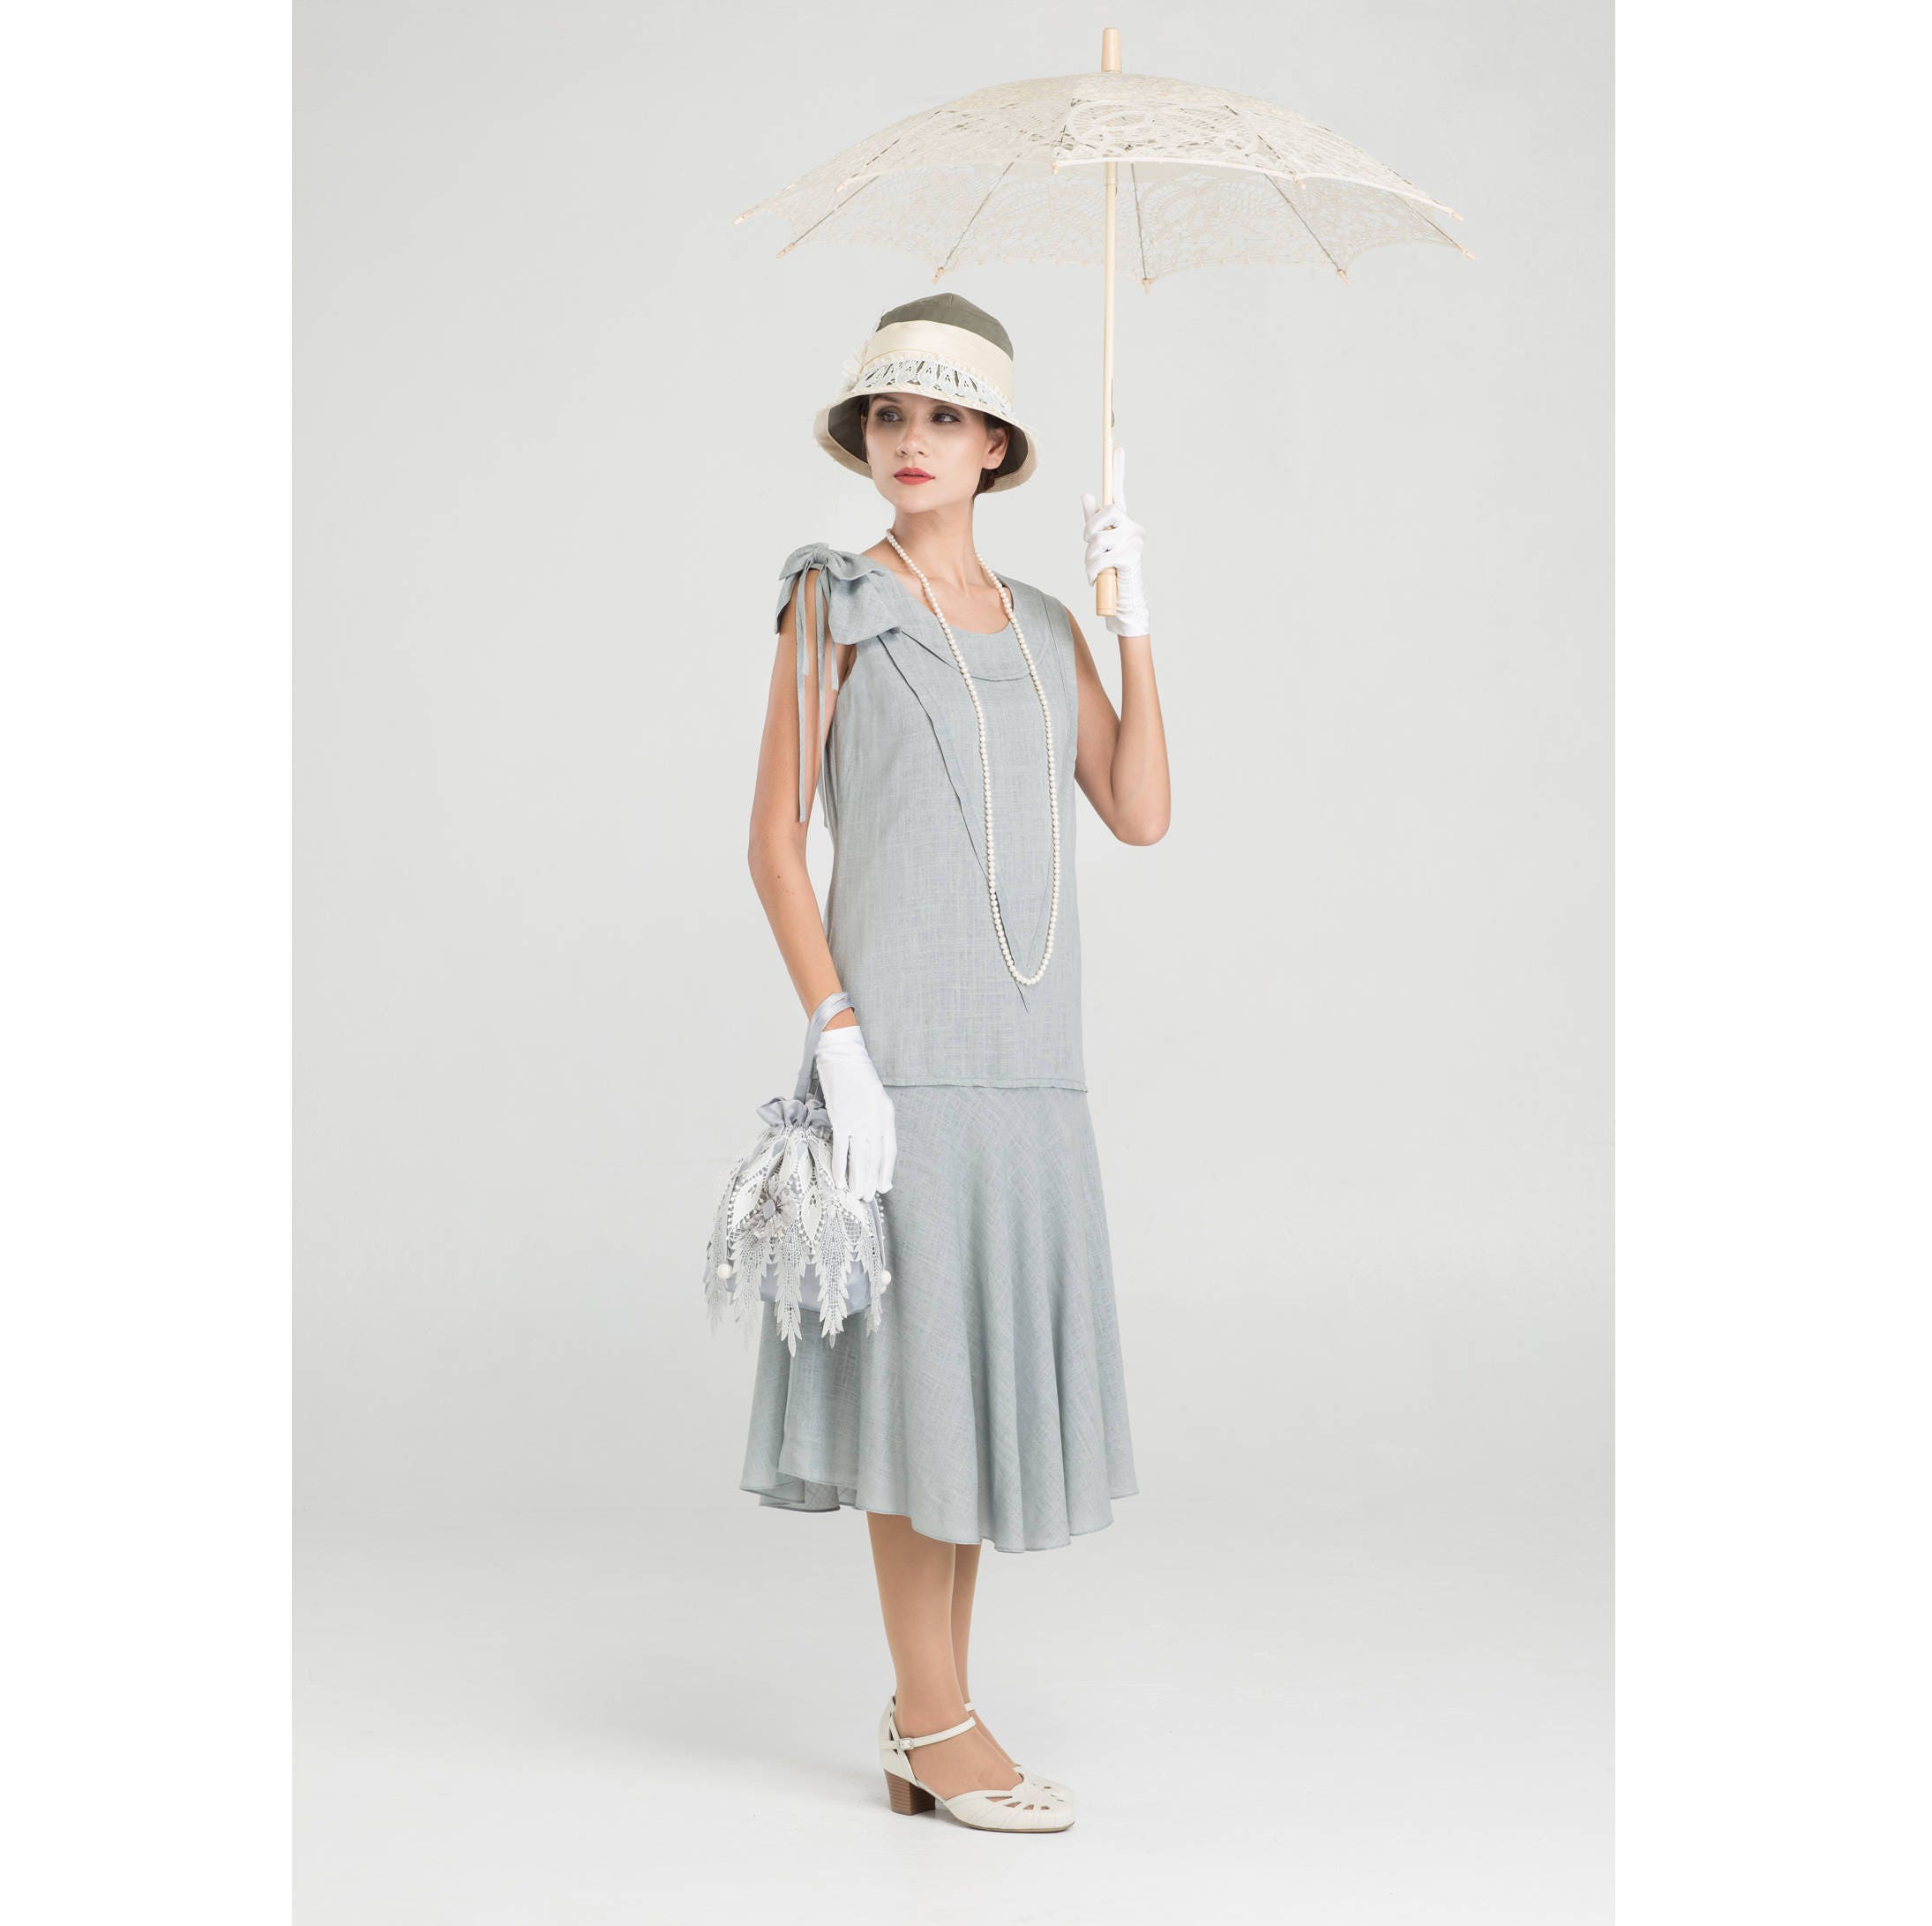 Linen Great Gatsby party dress in grey 1920s flapper dress